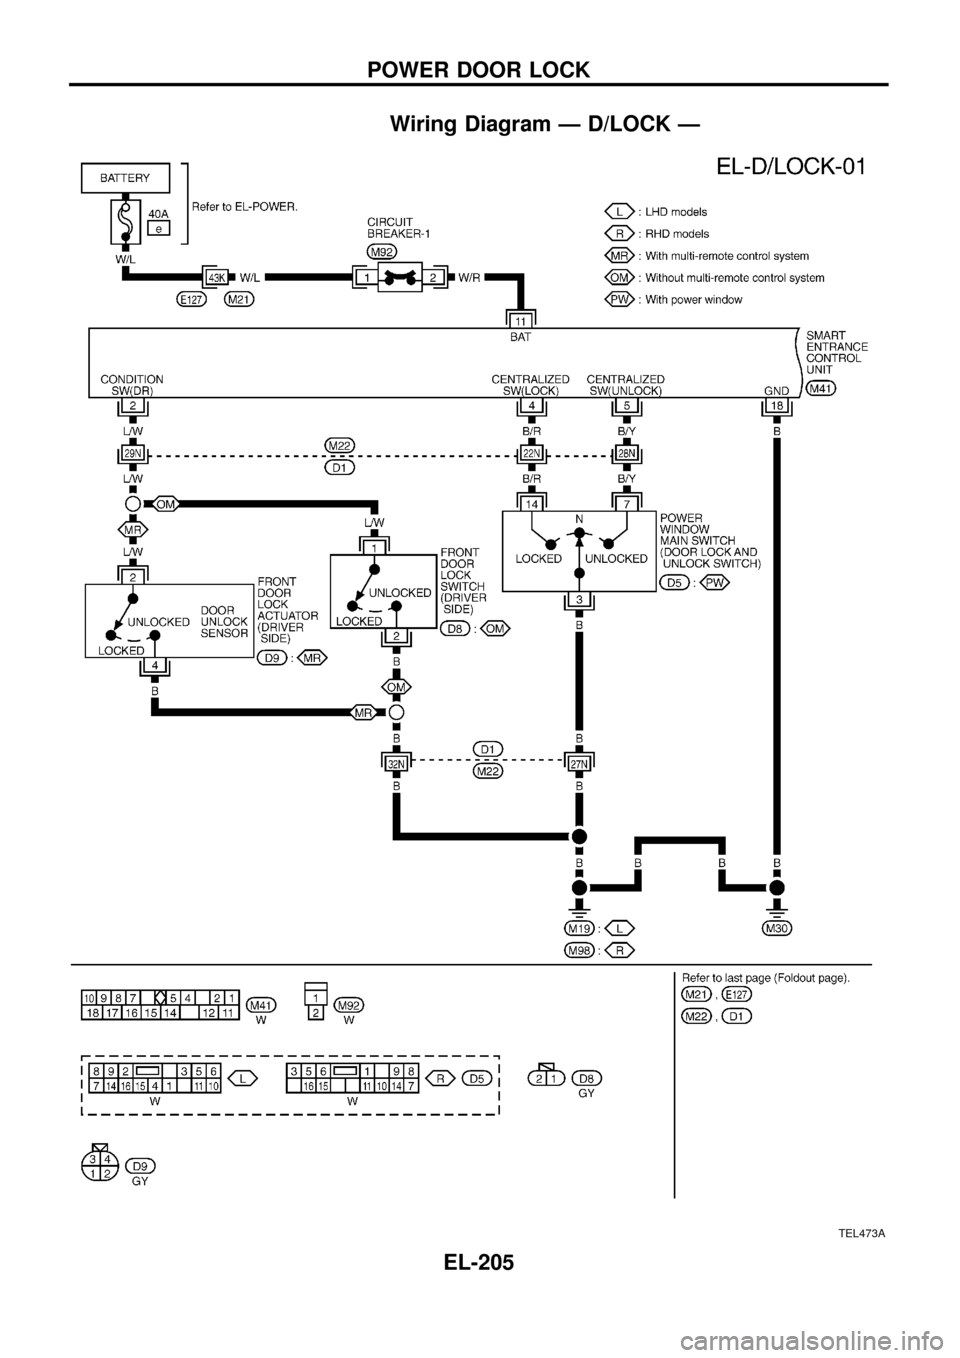 NISSAN PATROL 1998 Y61 / 5.G Electrical System Workshop Manual Wiring Diagram Ð D/LOCK Ð
TEL473A
POWER DOOR LOCK
EL-205 